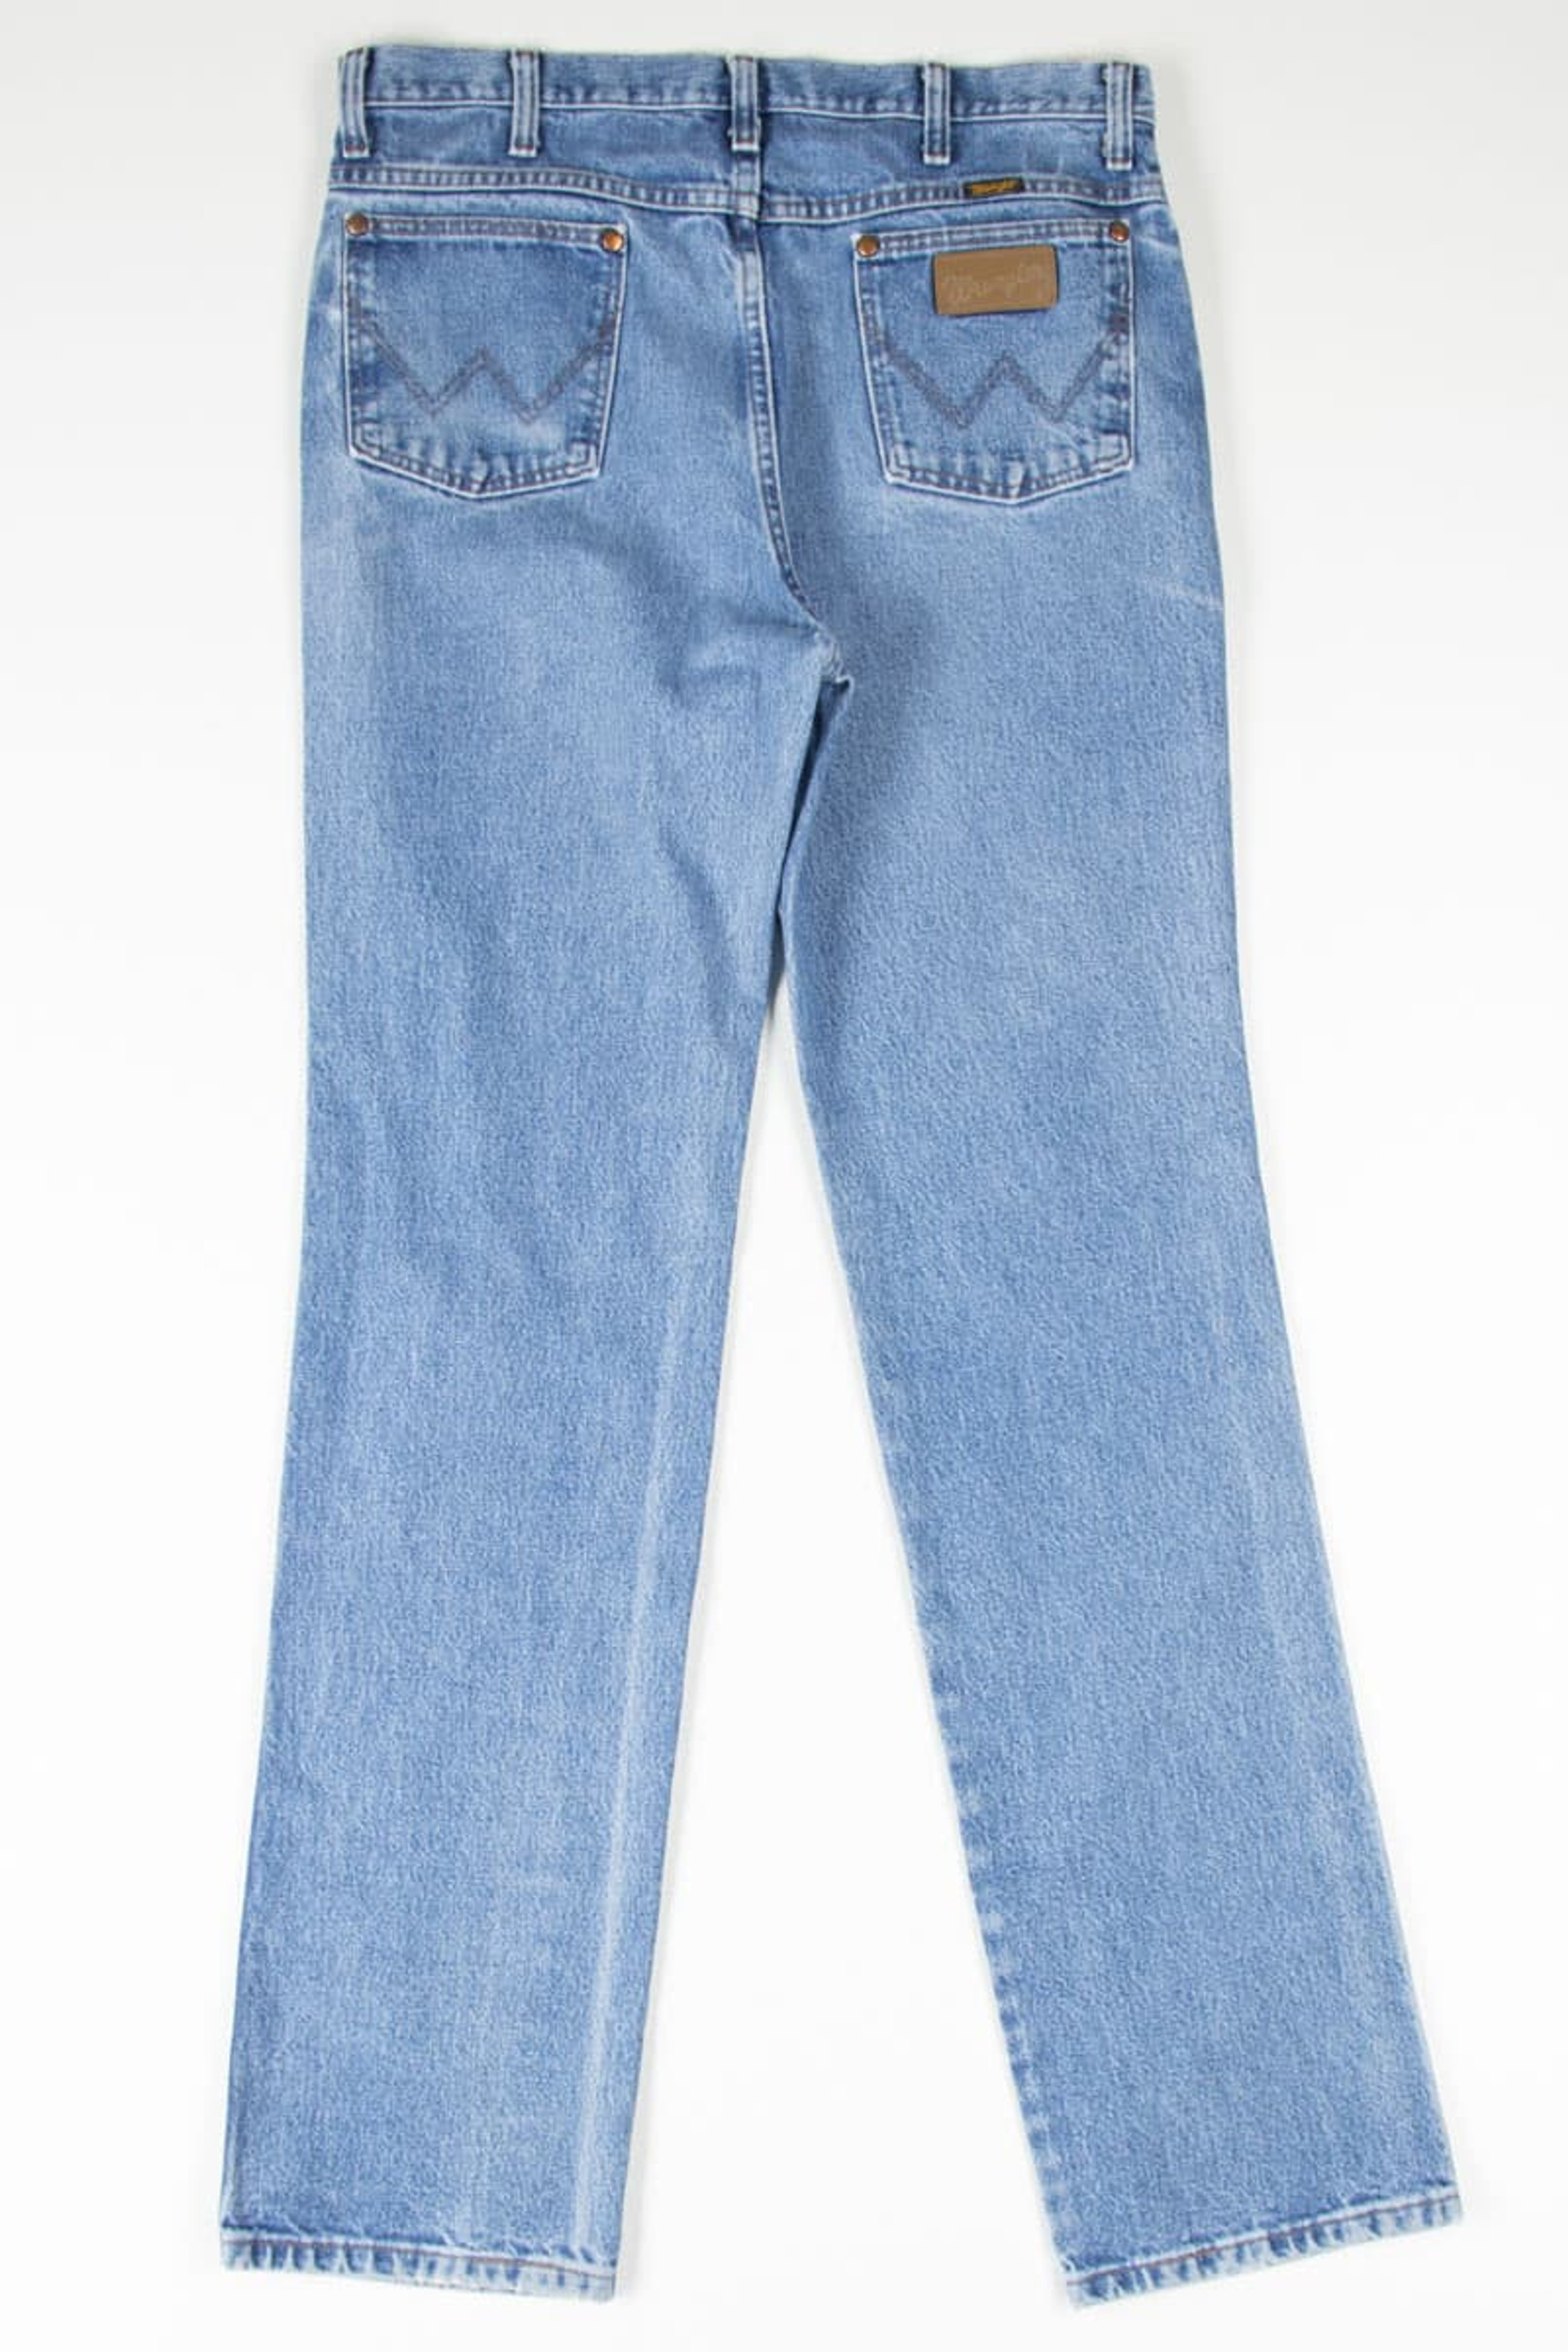 Levi's 501 Denim Jeans 615 (sz. 34W 36L) - Ragstock.com